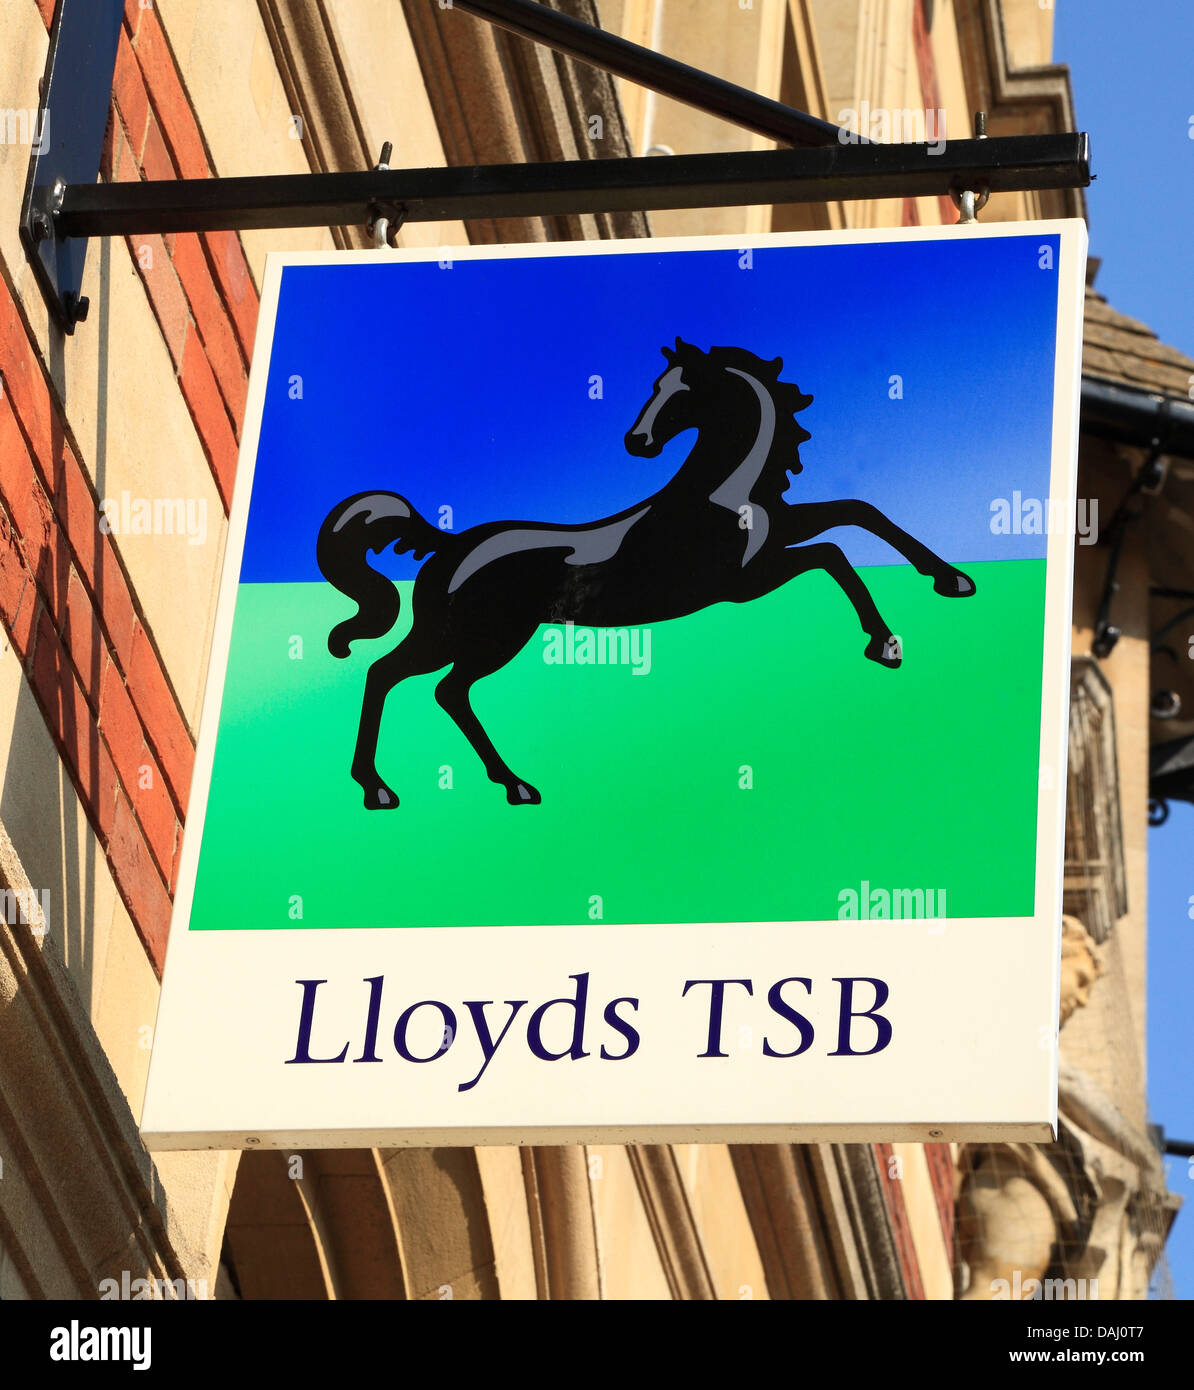 Lloyds TSB Bank firmar, logo, Inglaterra Foto de stock